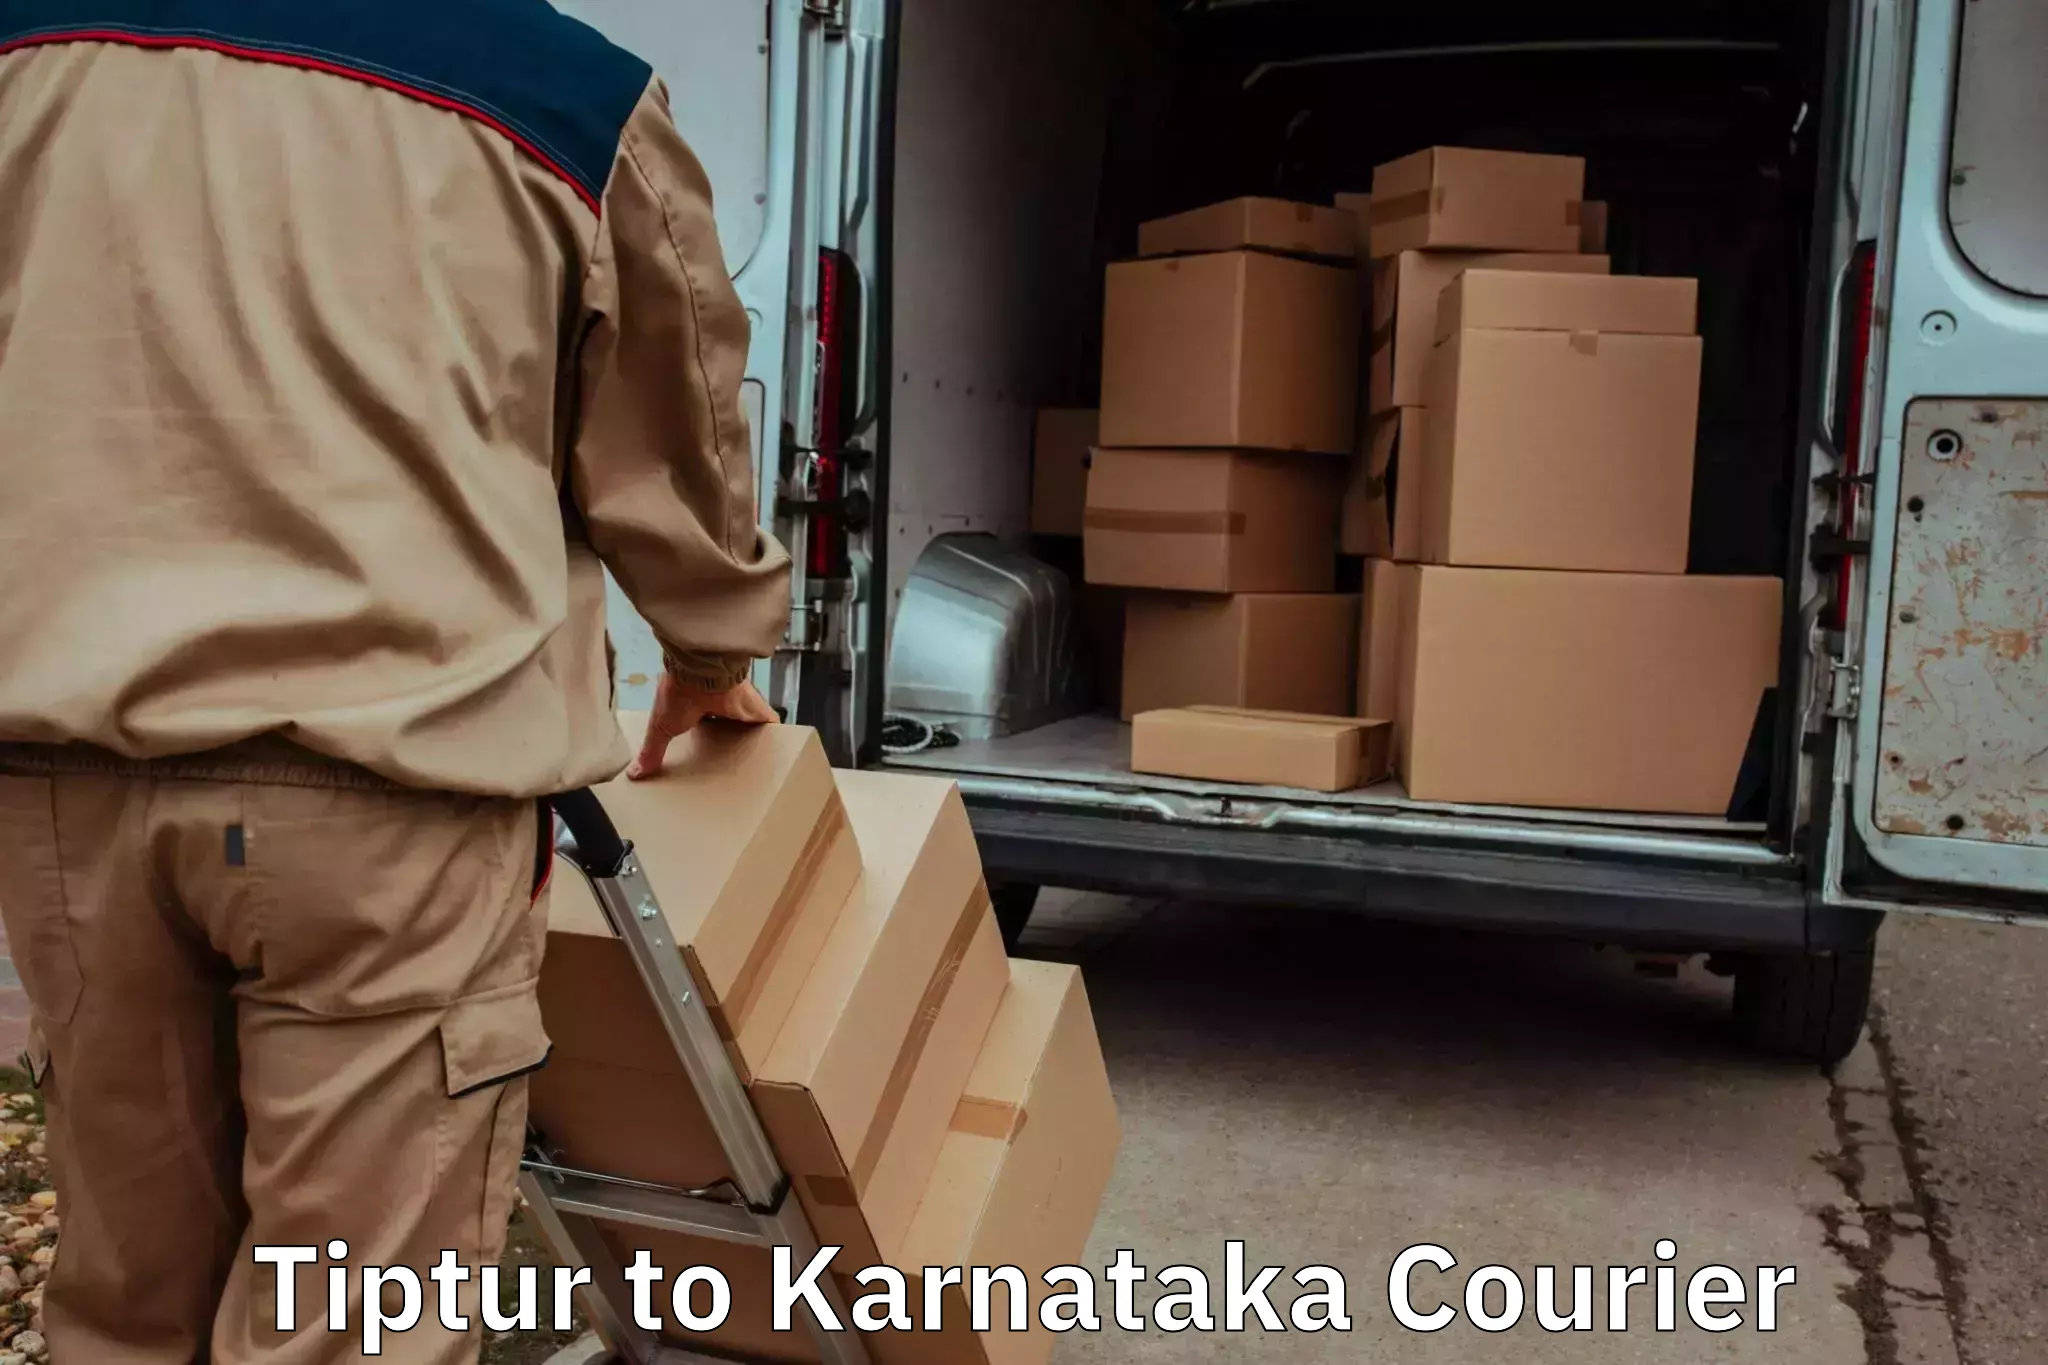 Professional moving company Tiptur to Karkala